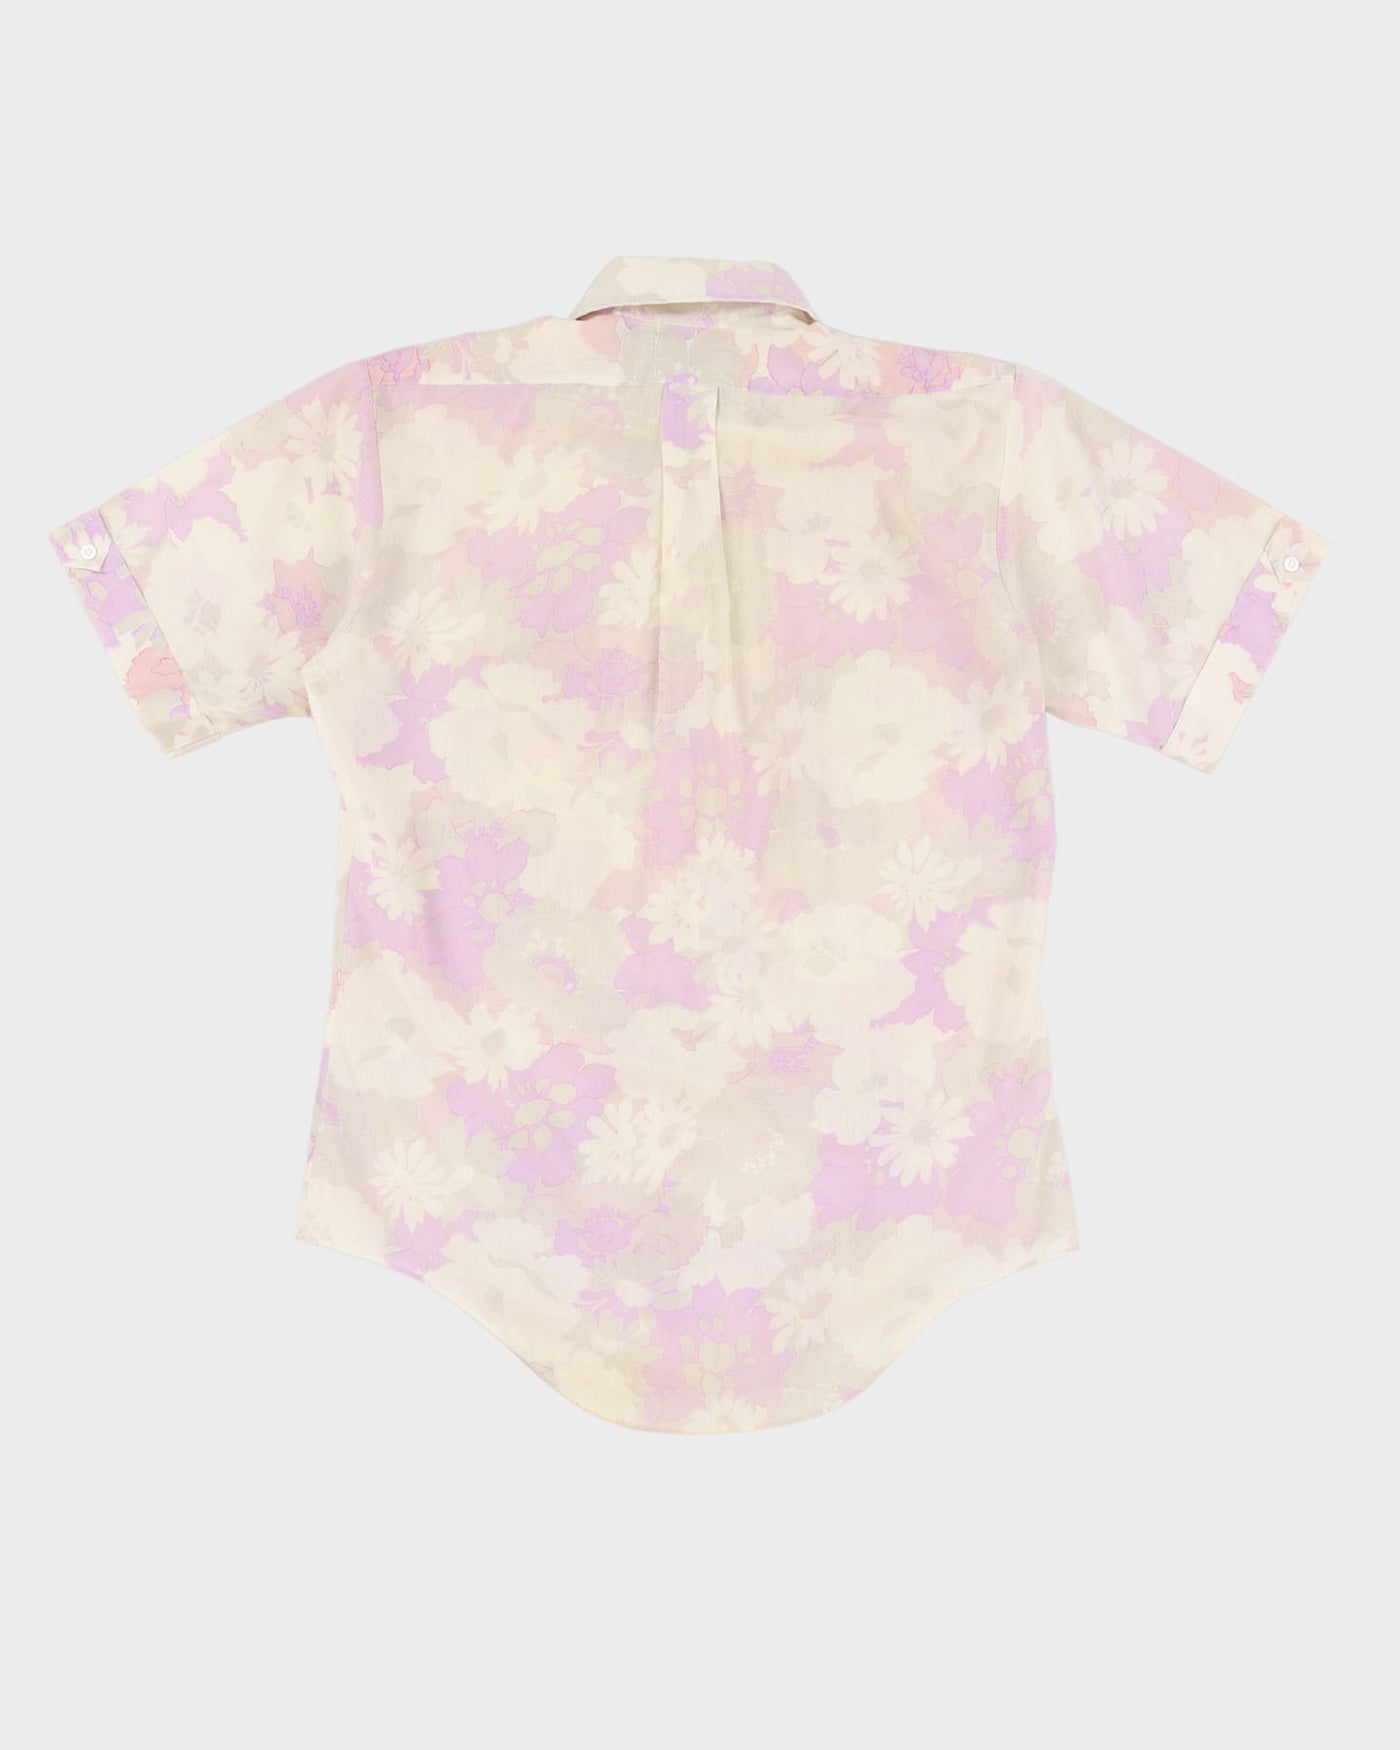 70s Malboro Purple / White Floral Short Sleeve Shirt - M